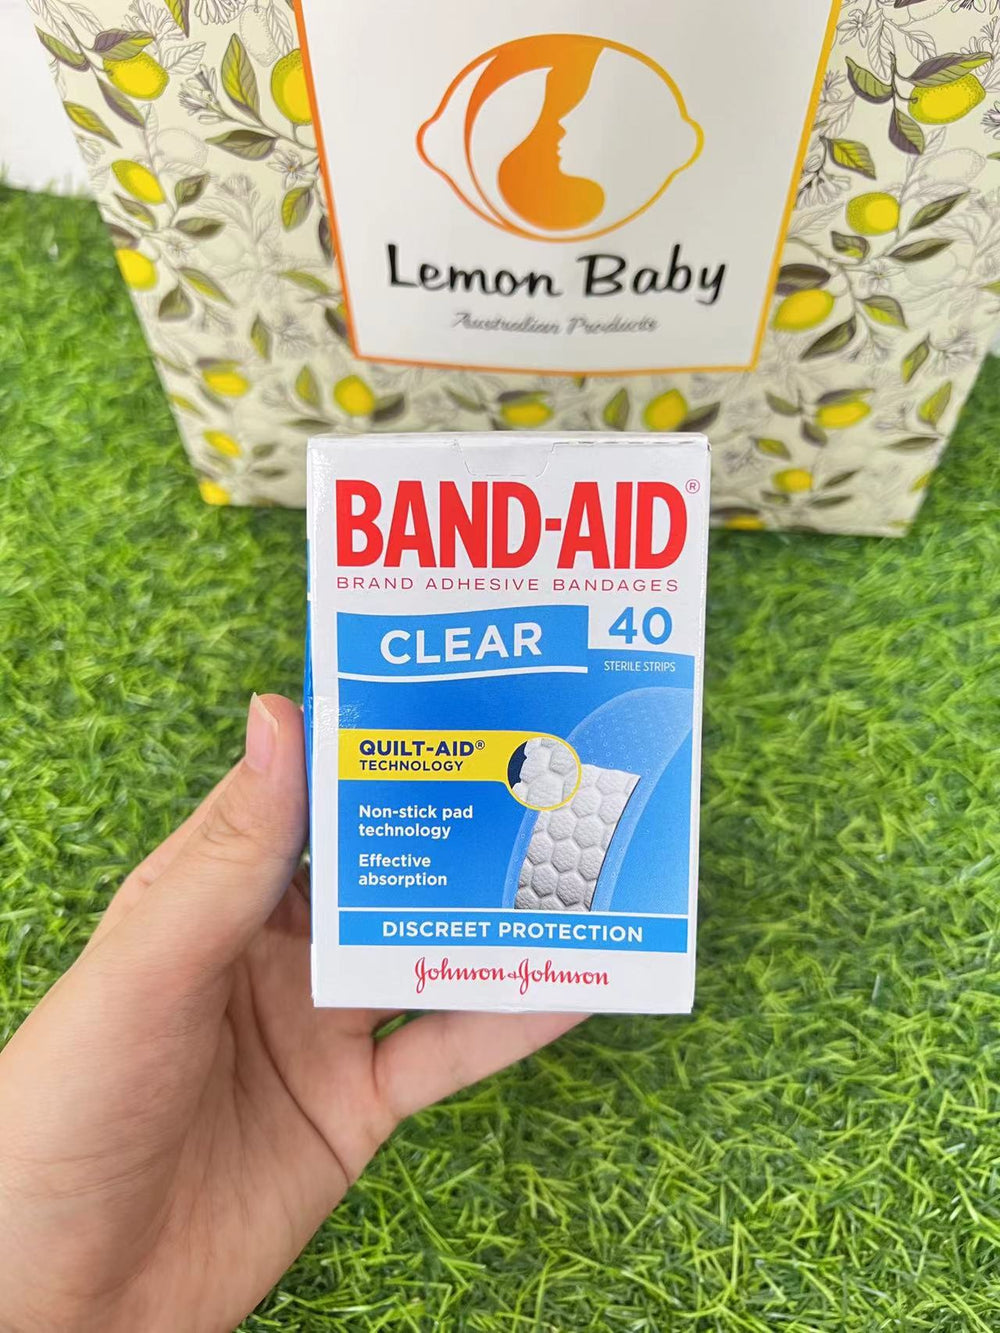 Band aid - adhesive bandages clear - Lemonbaby